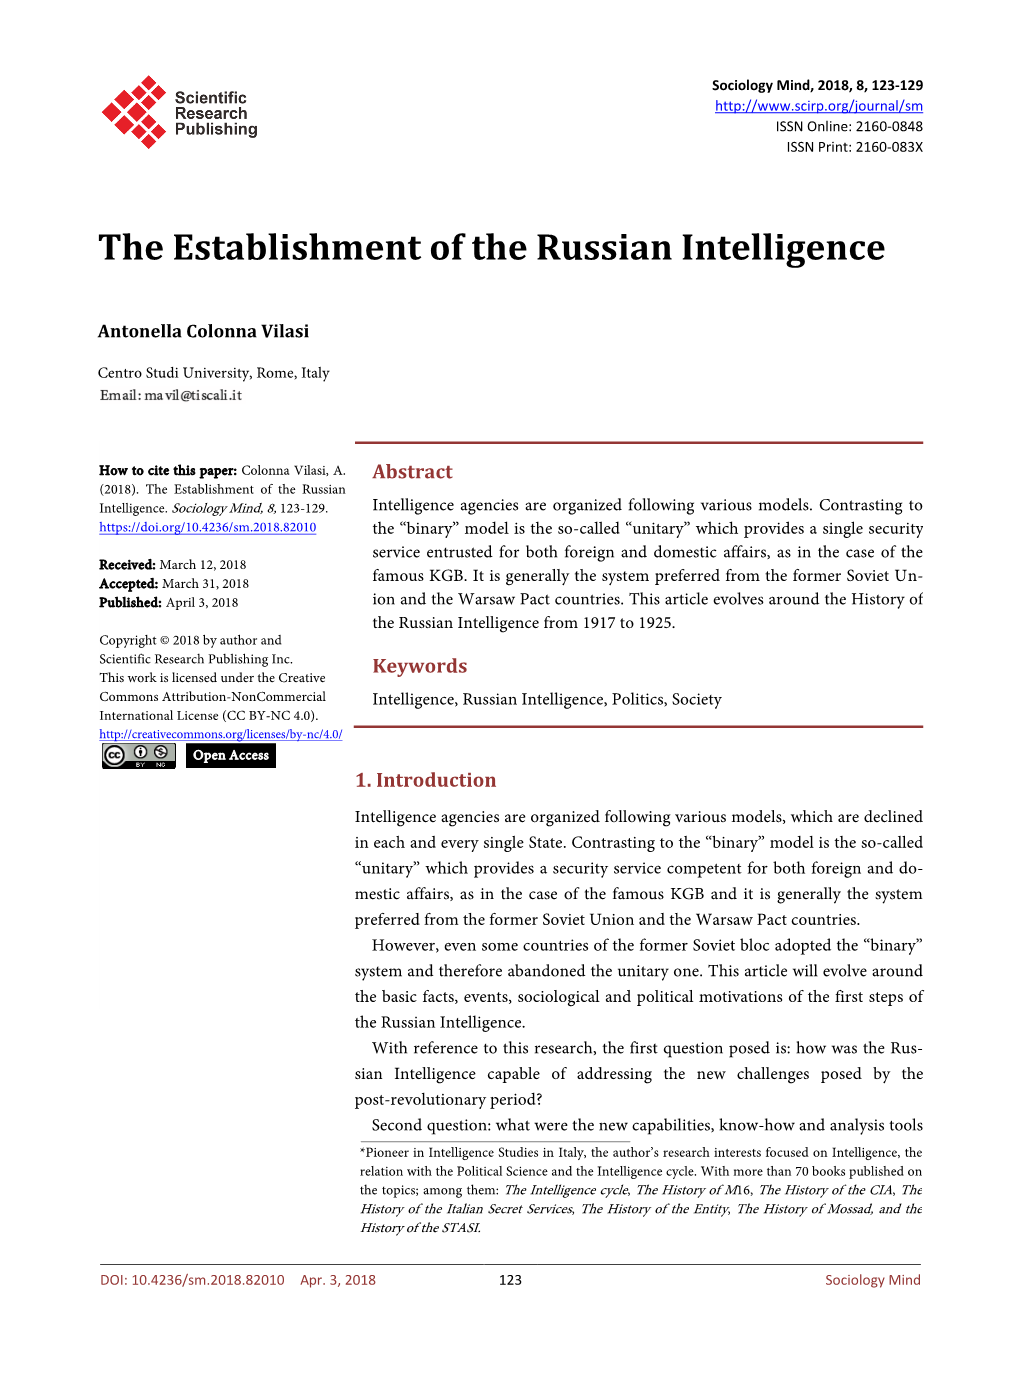 The Establishment of the Russian Intelligence